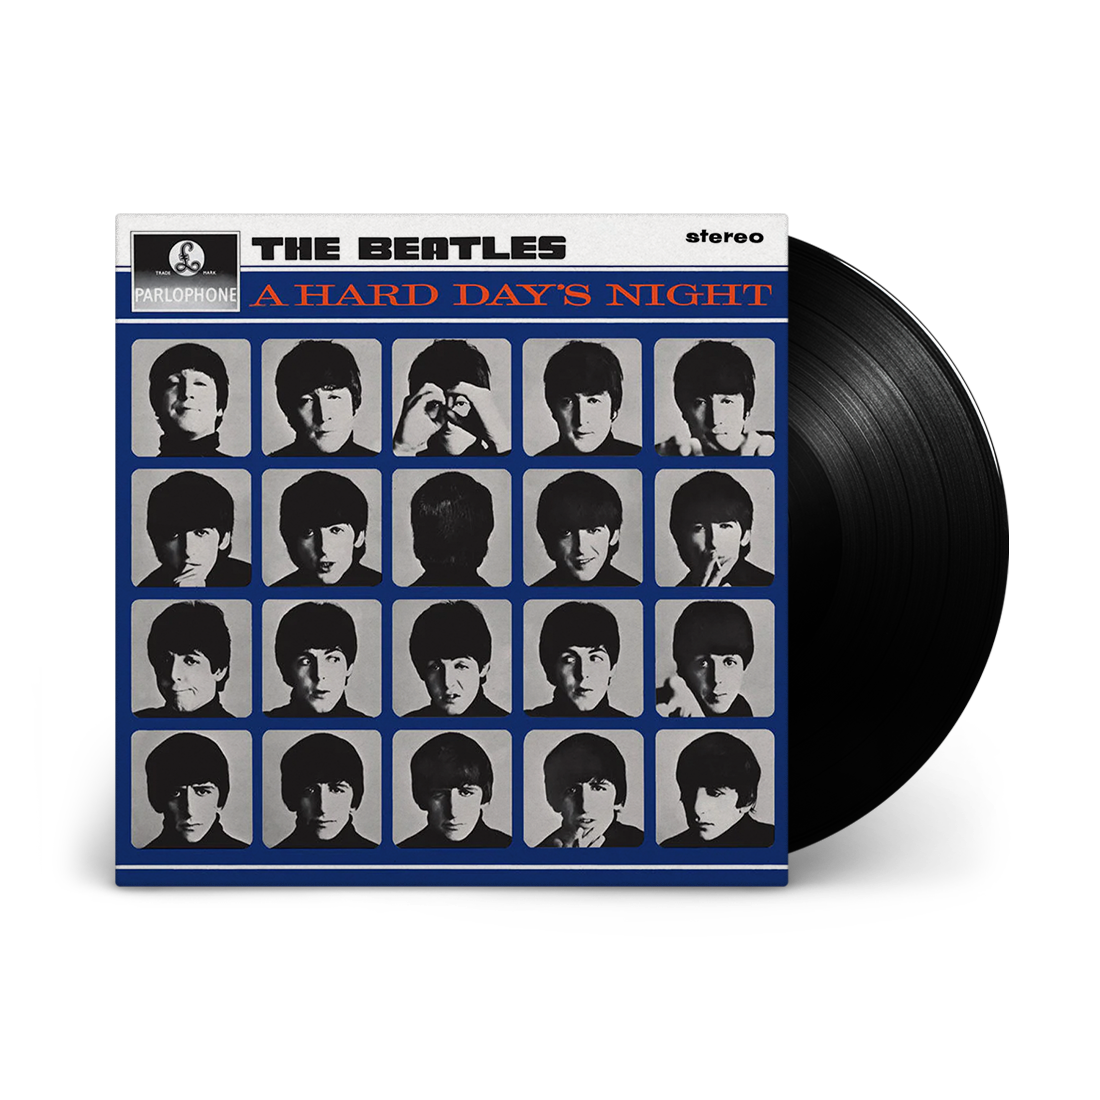 The Beatles - A Hard Days Night (Stereo 180 Gram Vinyl)